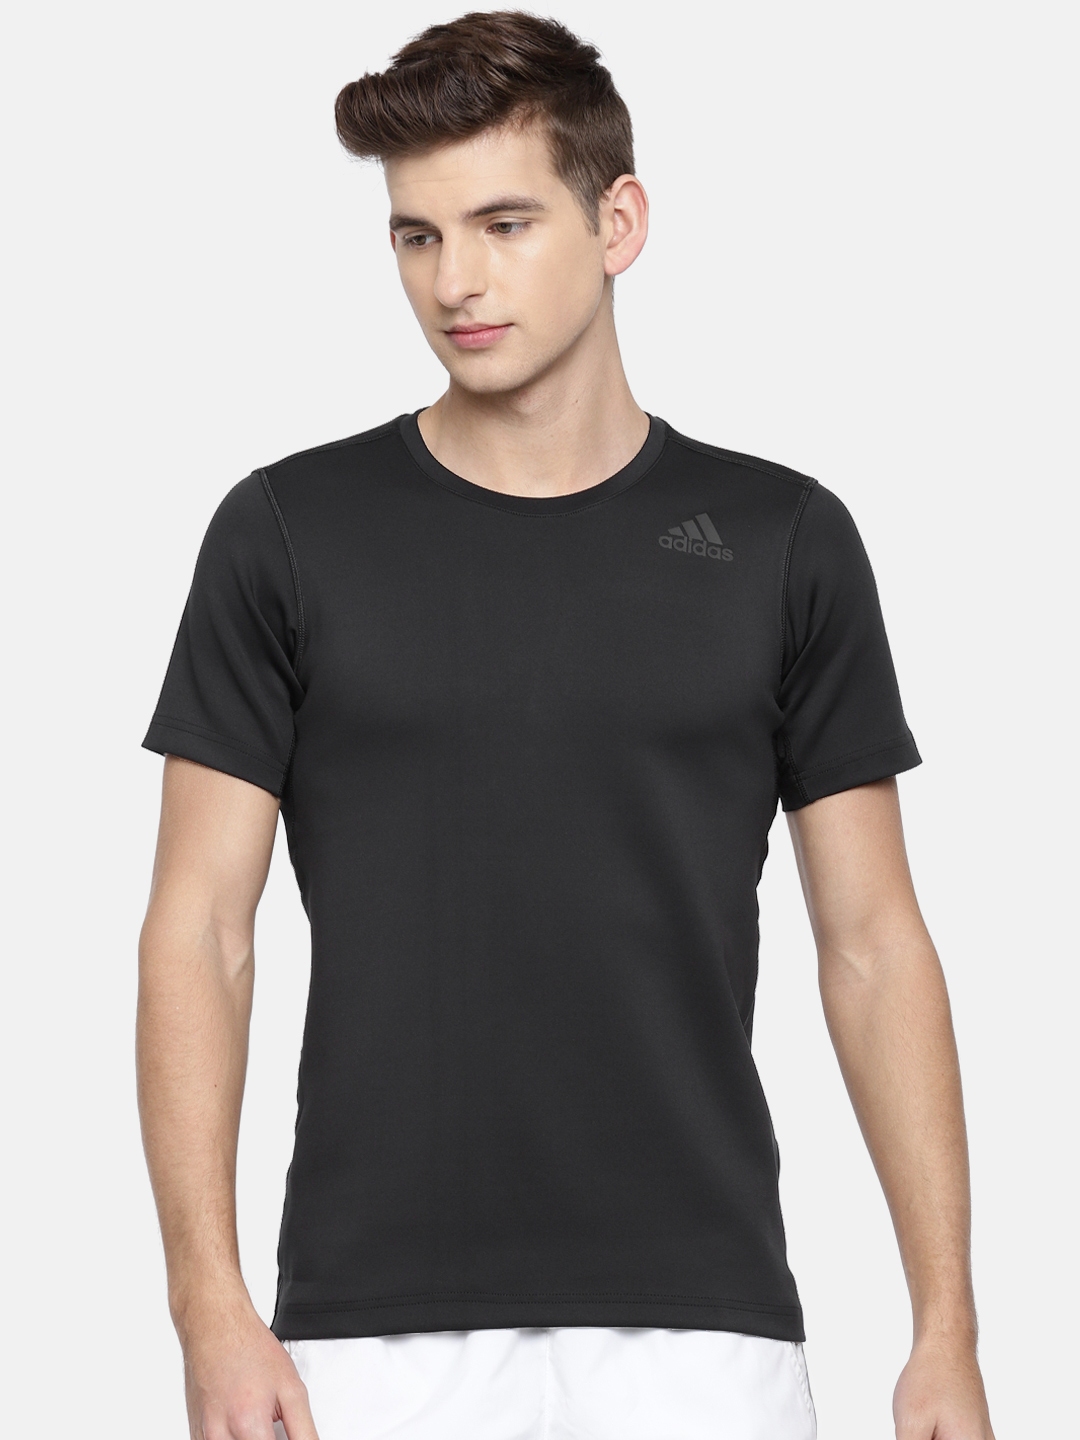 Buy ADIDAS Men Black Solid FREELIFT FIT CL T Shirt - Tshirts for Men ...